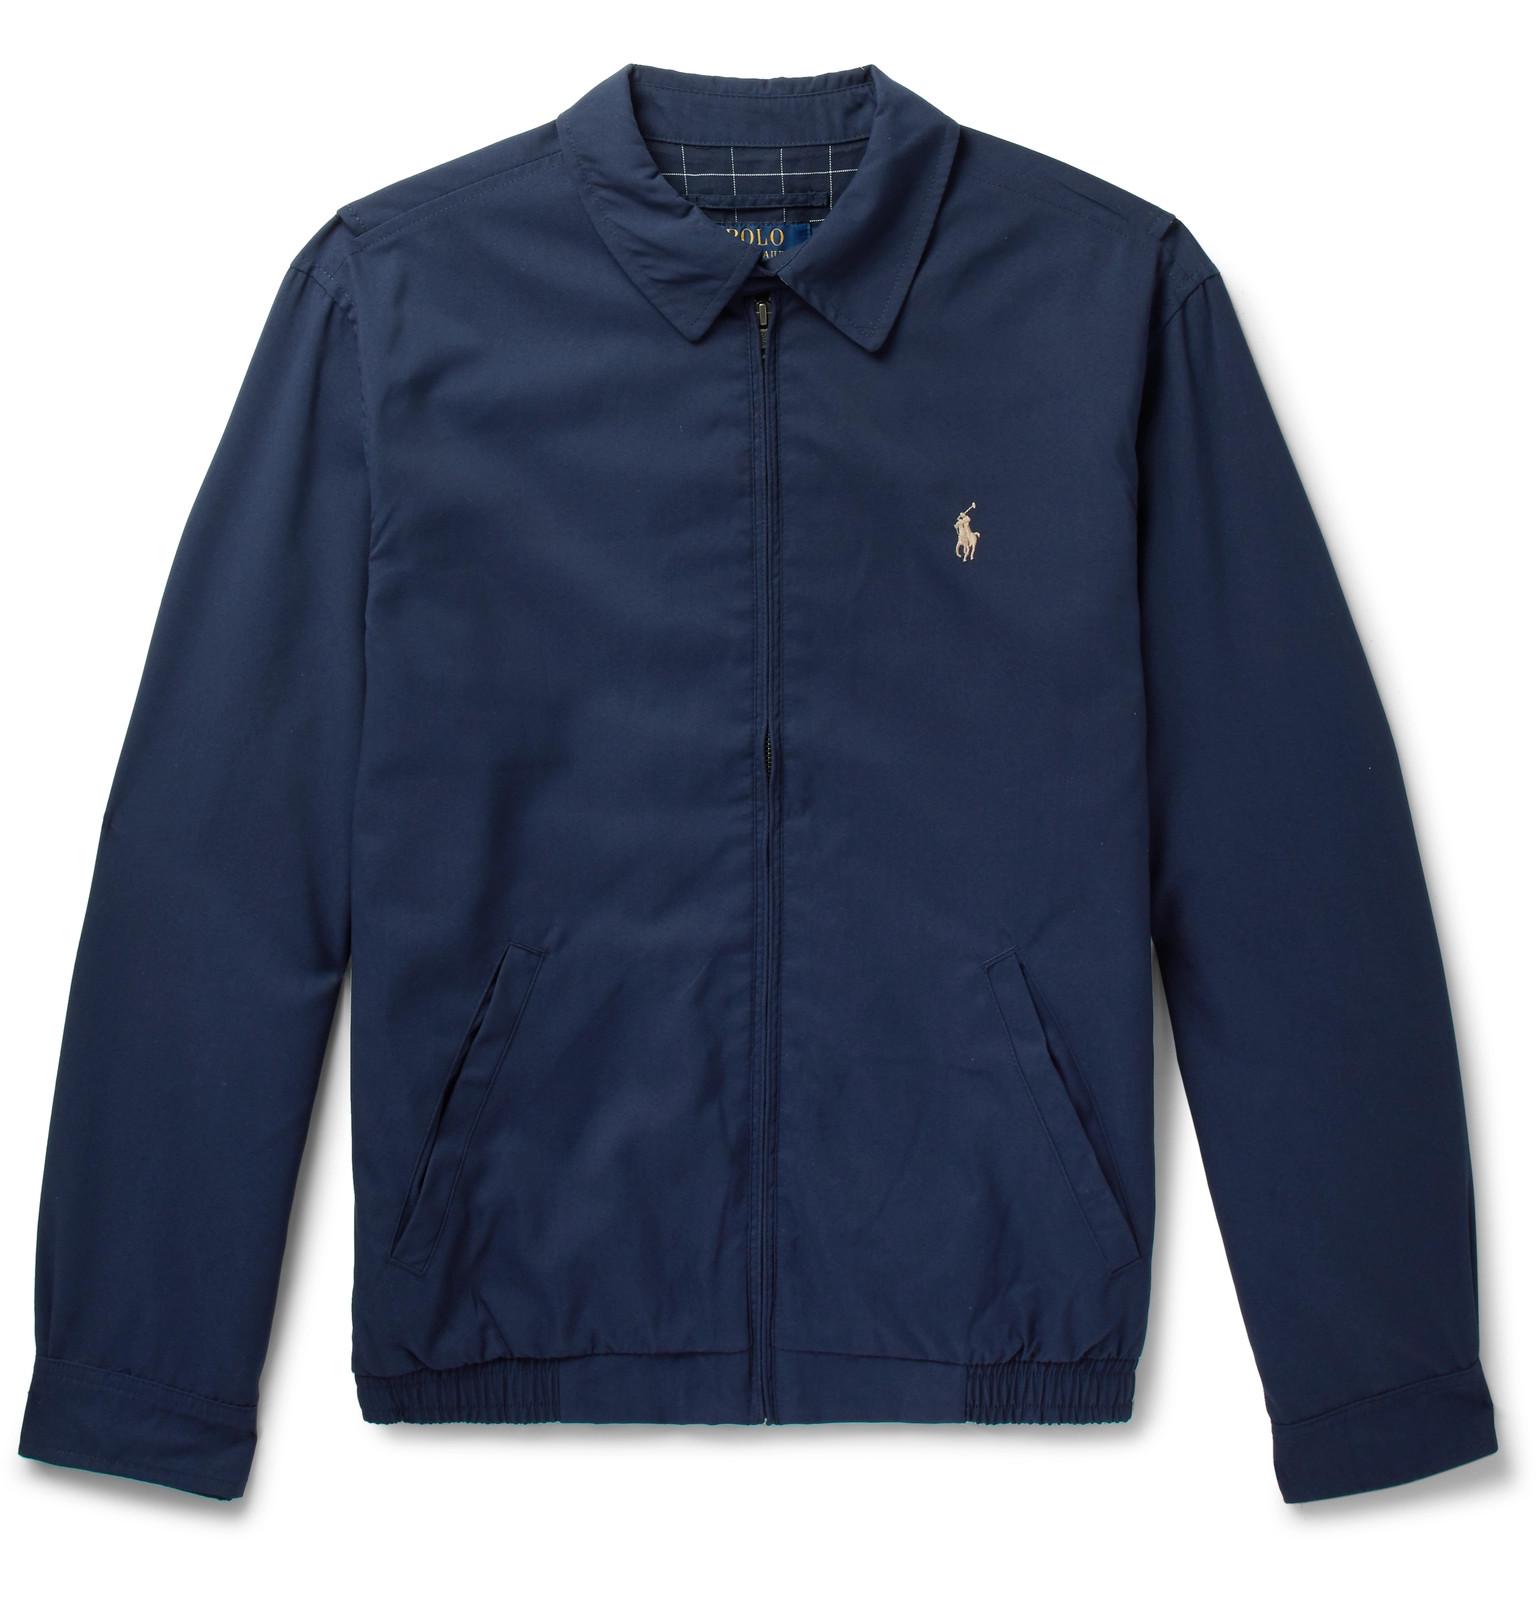 Polo Ralph Lauren Cotton Twill Blouson Jacket in Navy (Blue) for Men - Lyst